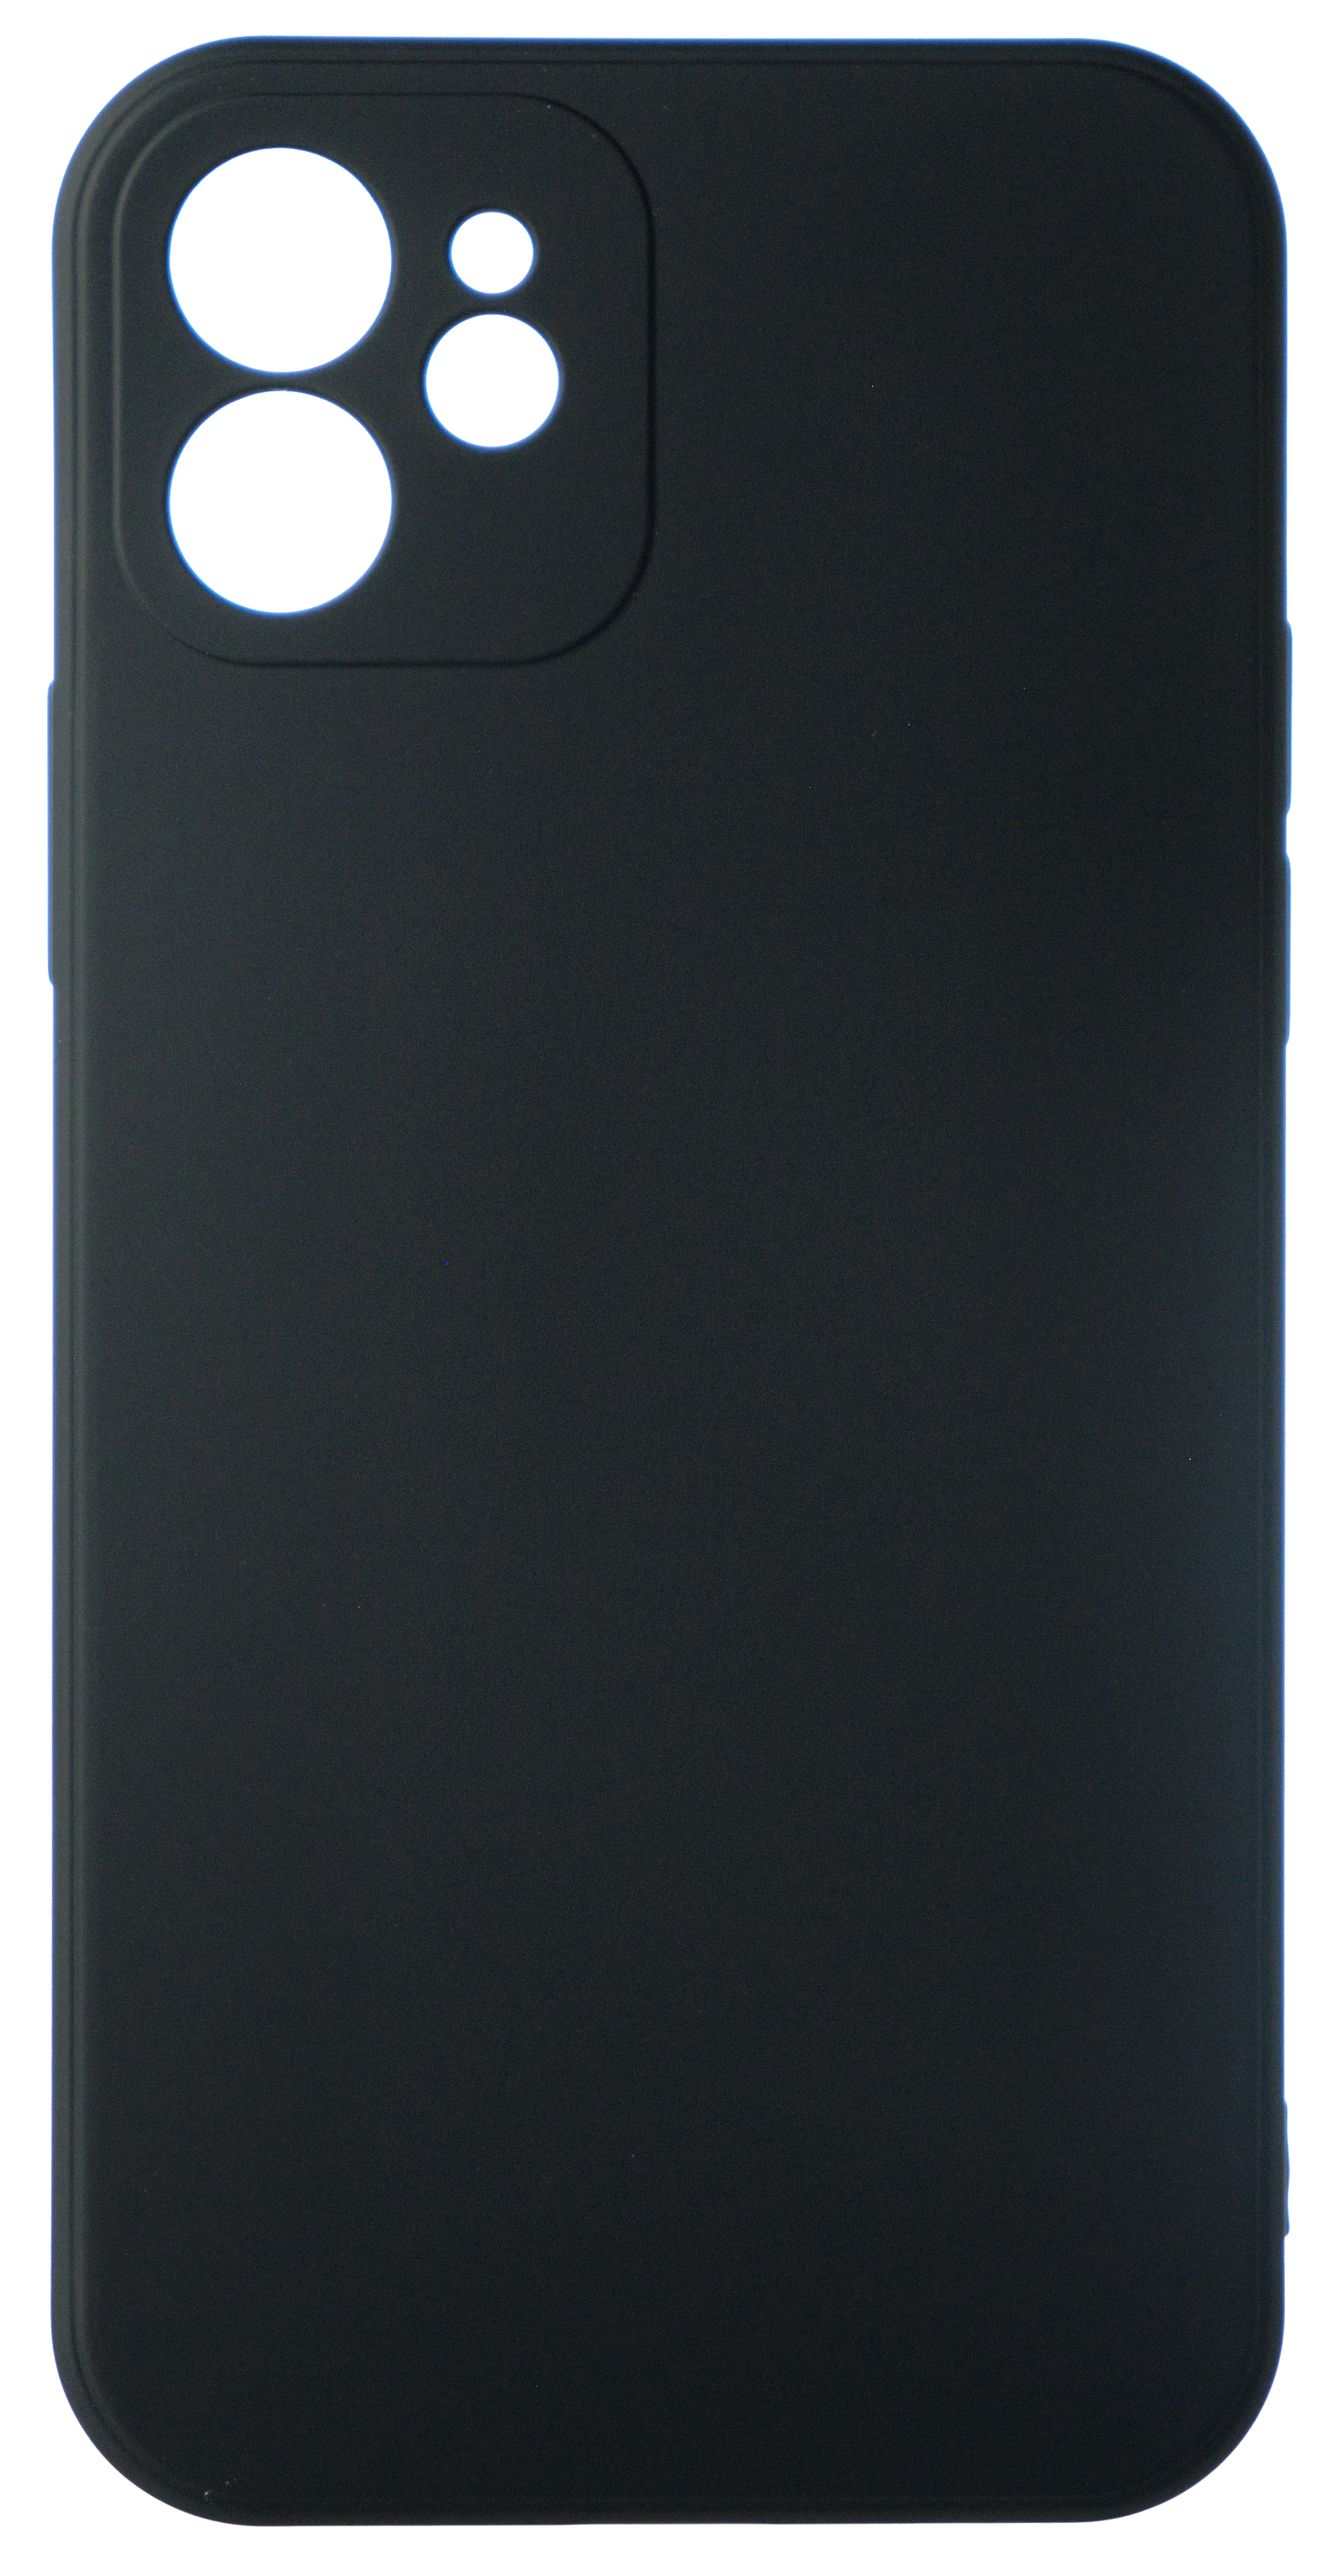 Чехол Soft-Touch для iPhone 12 черный